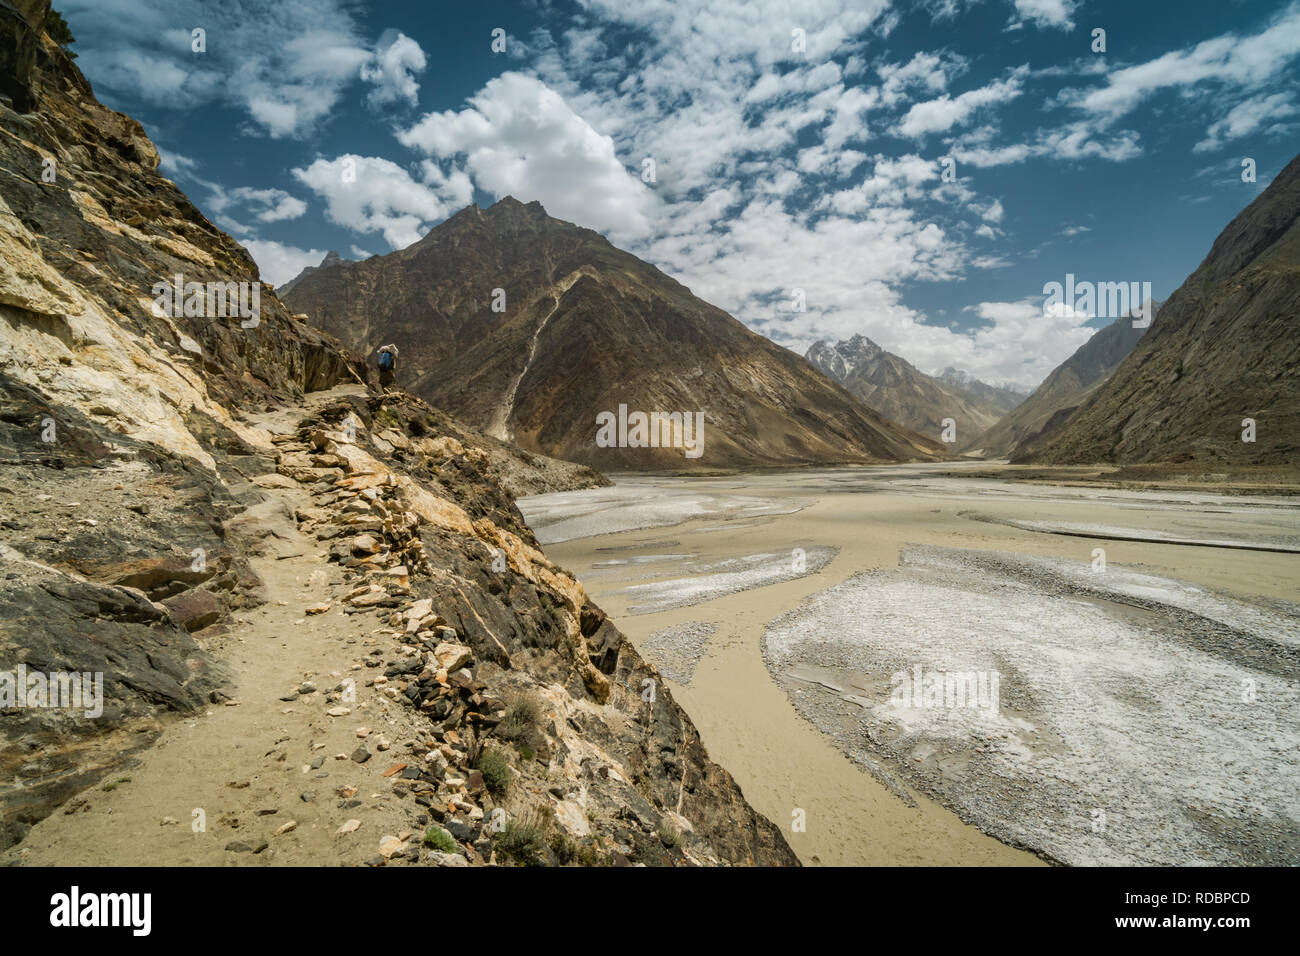 Scenic hiking trail above river in Karakoram Mountains, Pakistan. Stock Photo